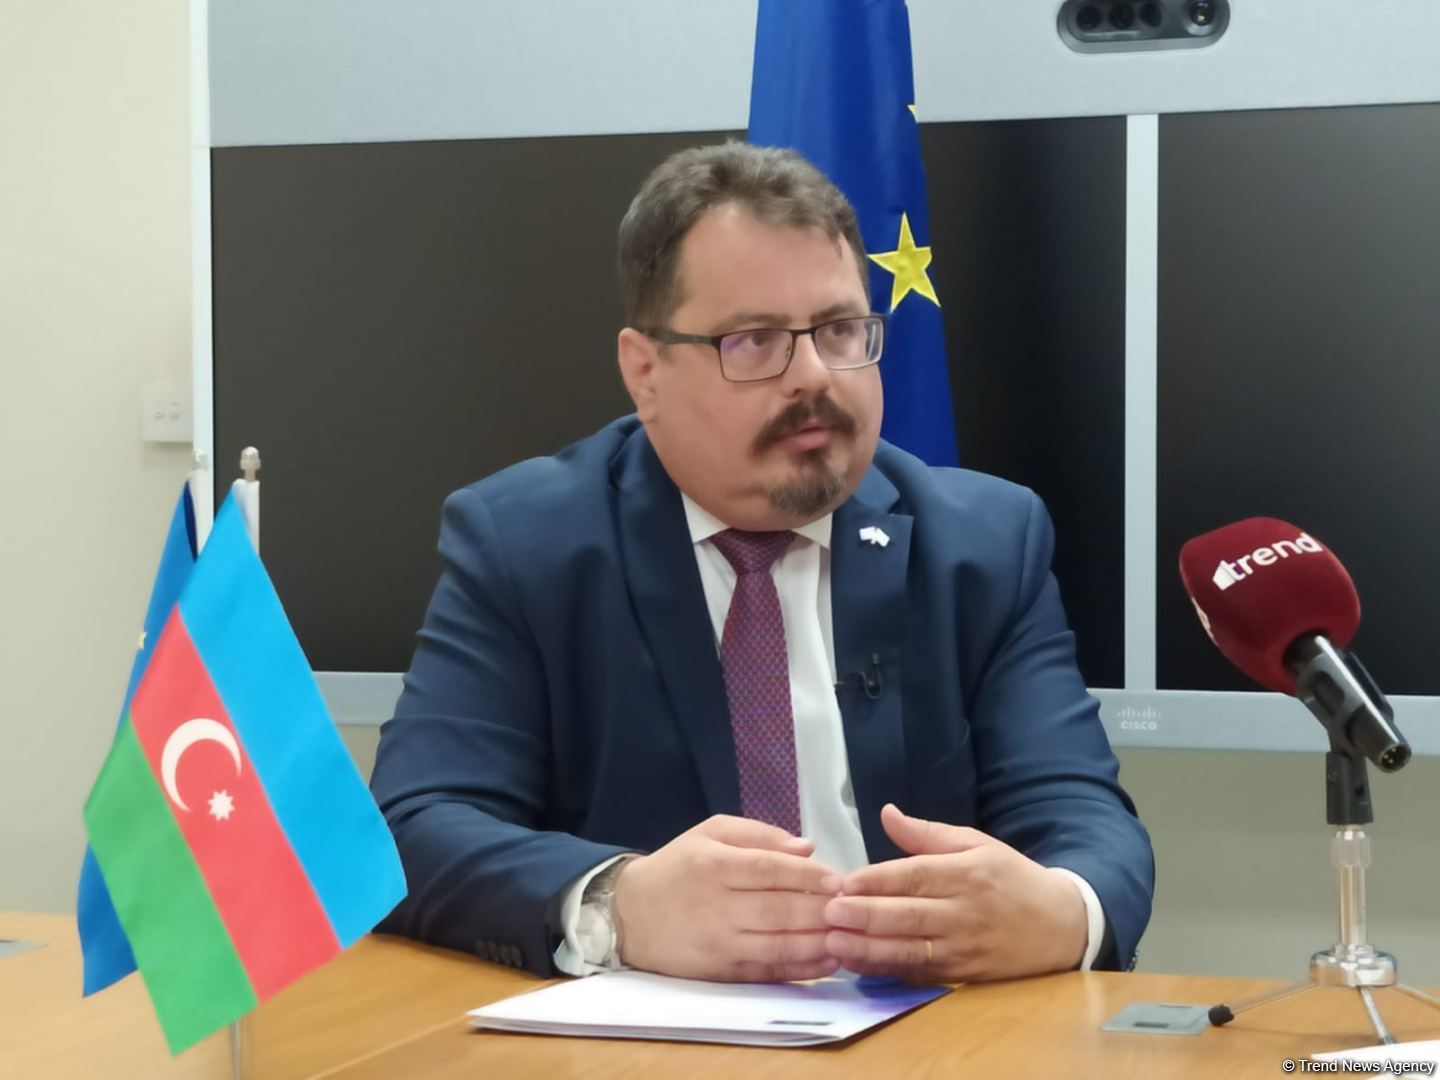 EU supports business in Azerbaijan - Ambassador Peter Michalko